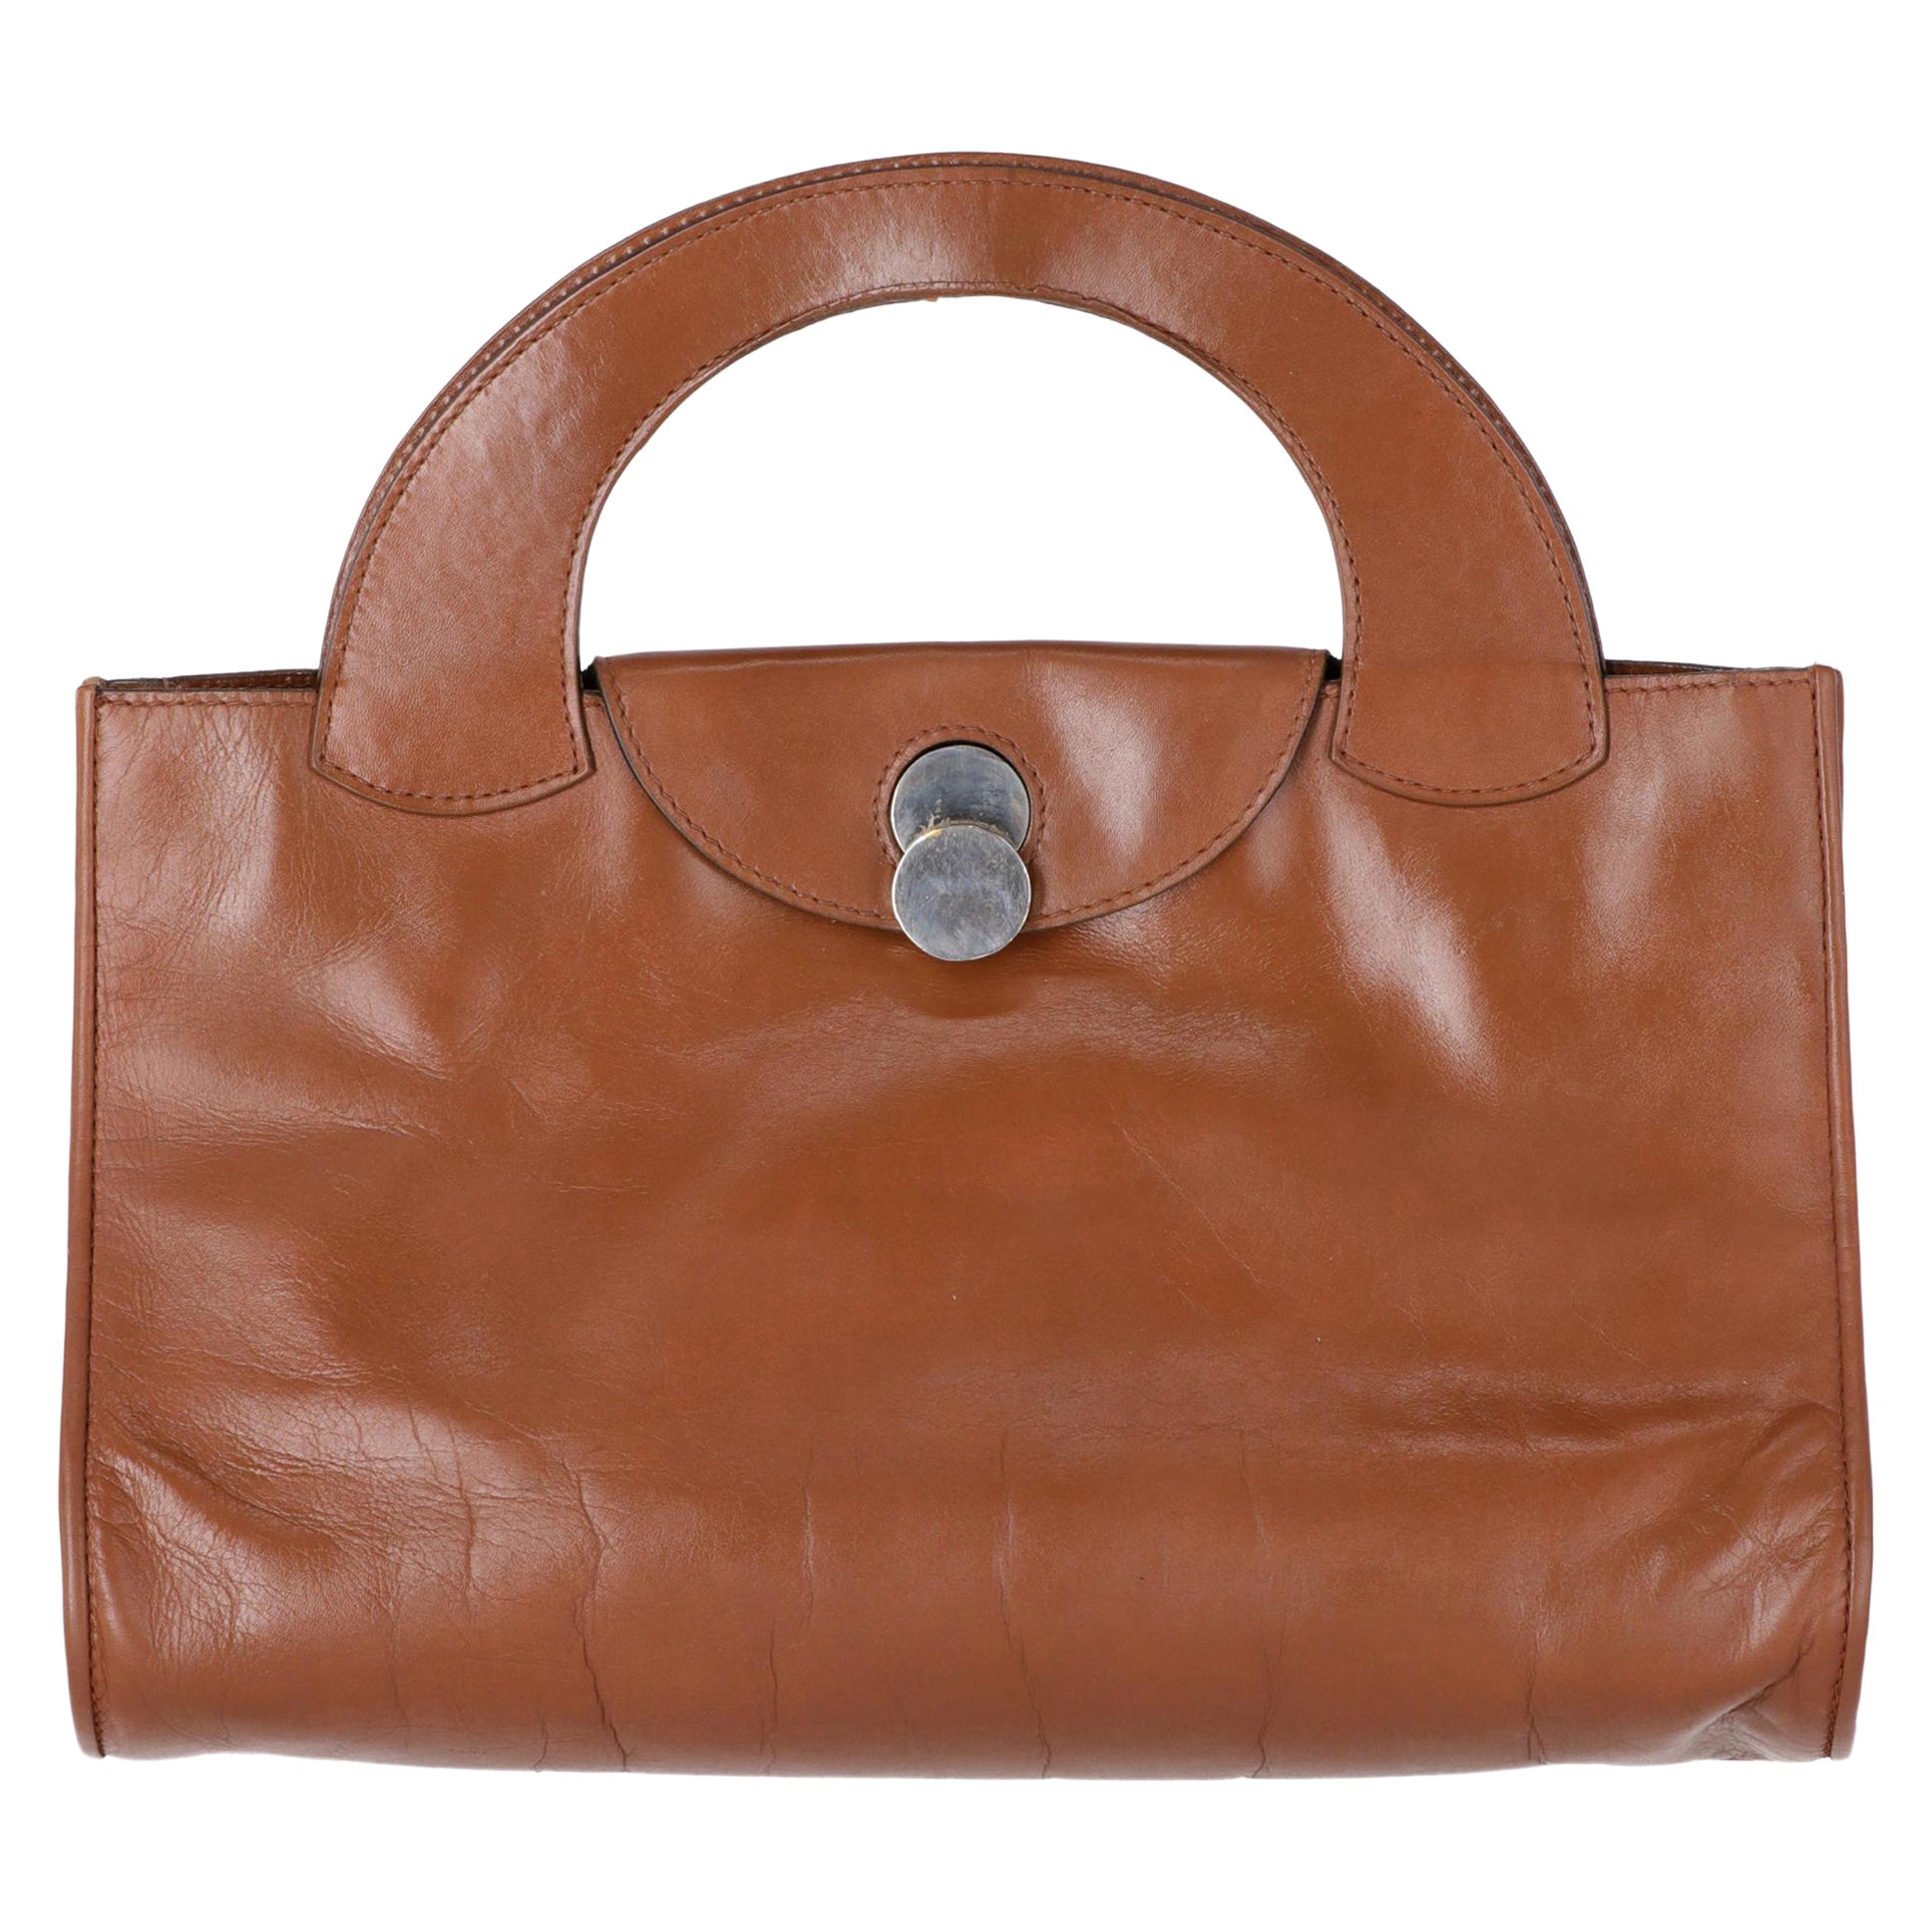 1970s Gherardini Vintage brown leather handbag